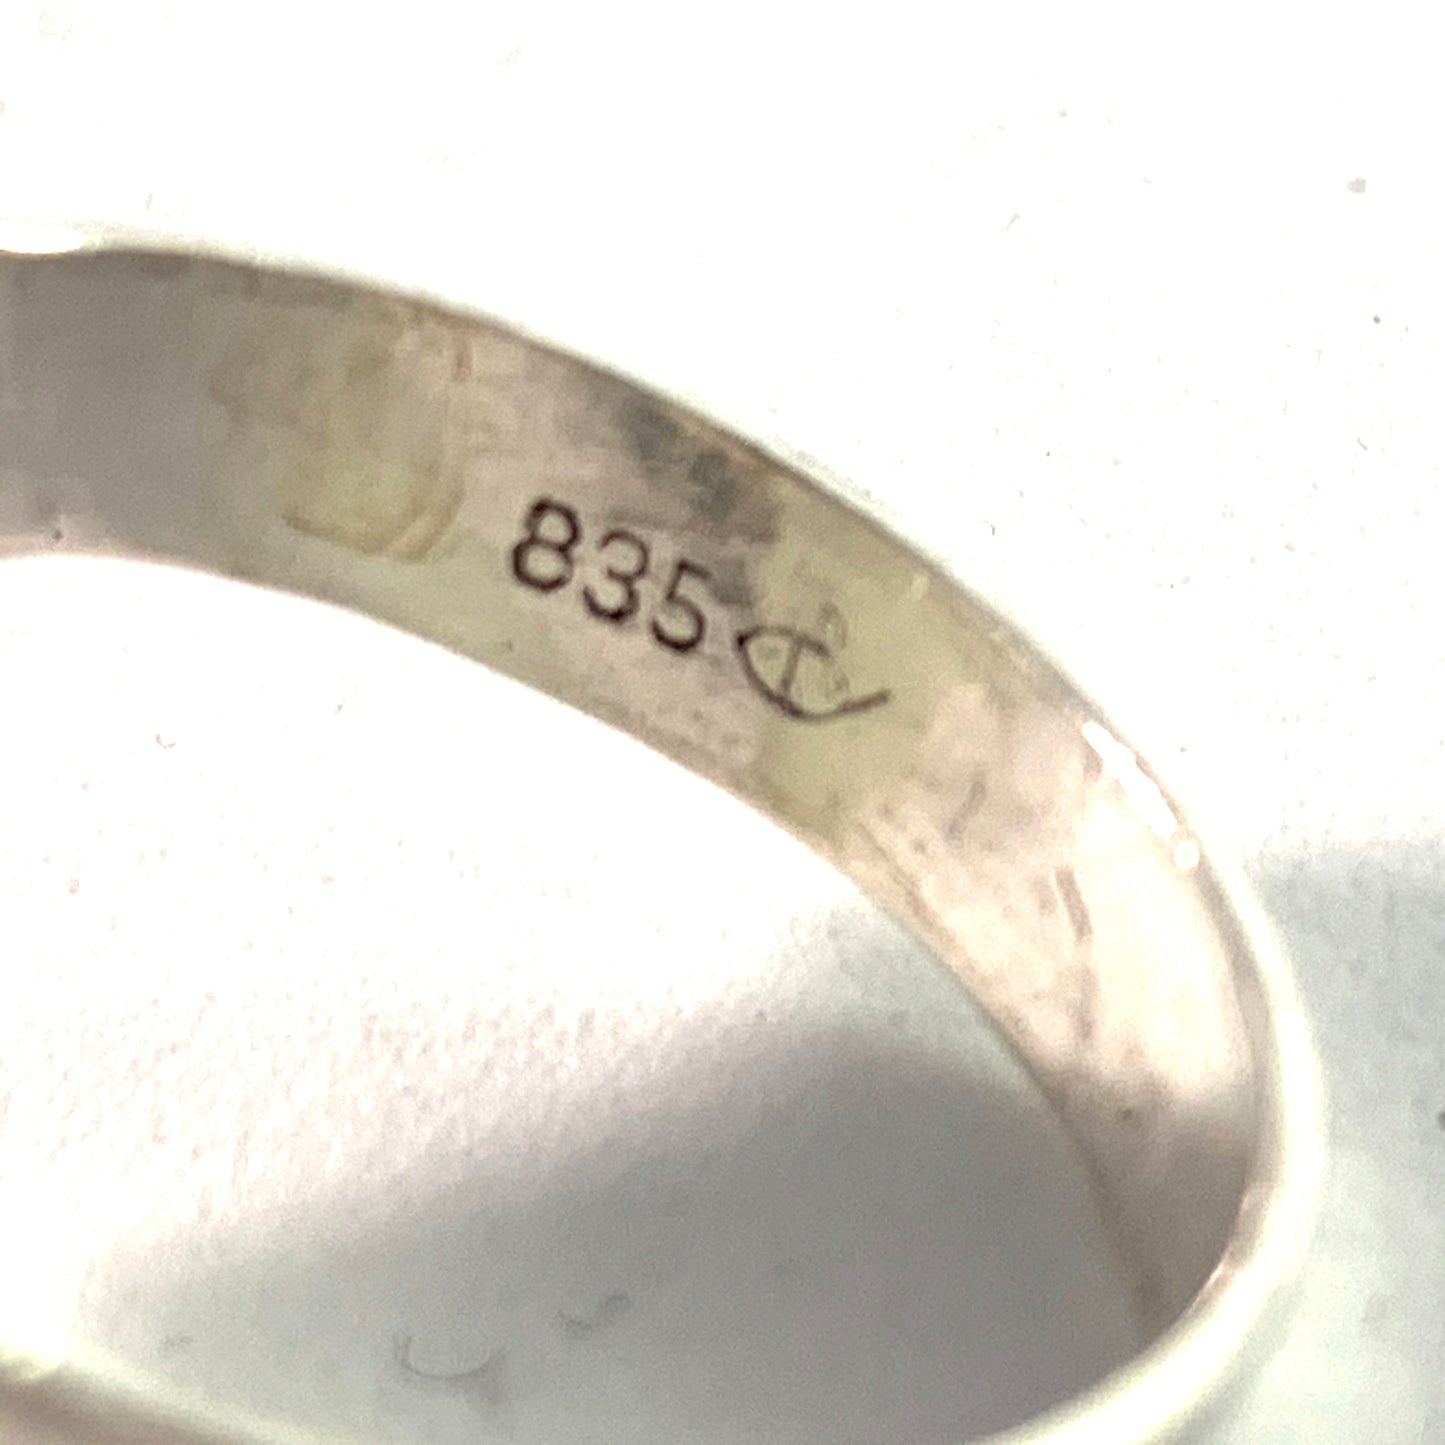 Fischland Ostseeschmuck, Germany 1960s 835 Silver Baltic Amber Ring